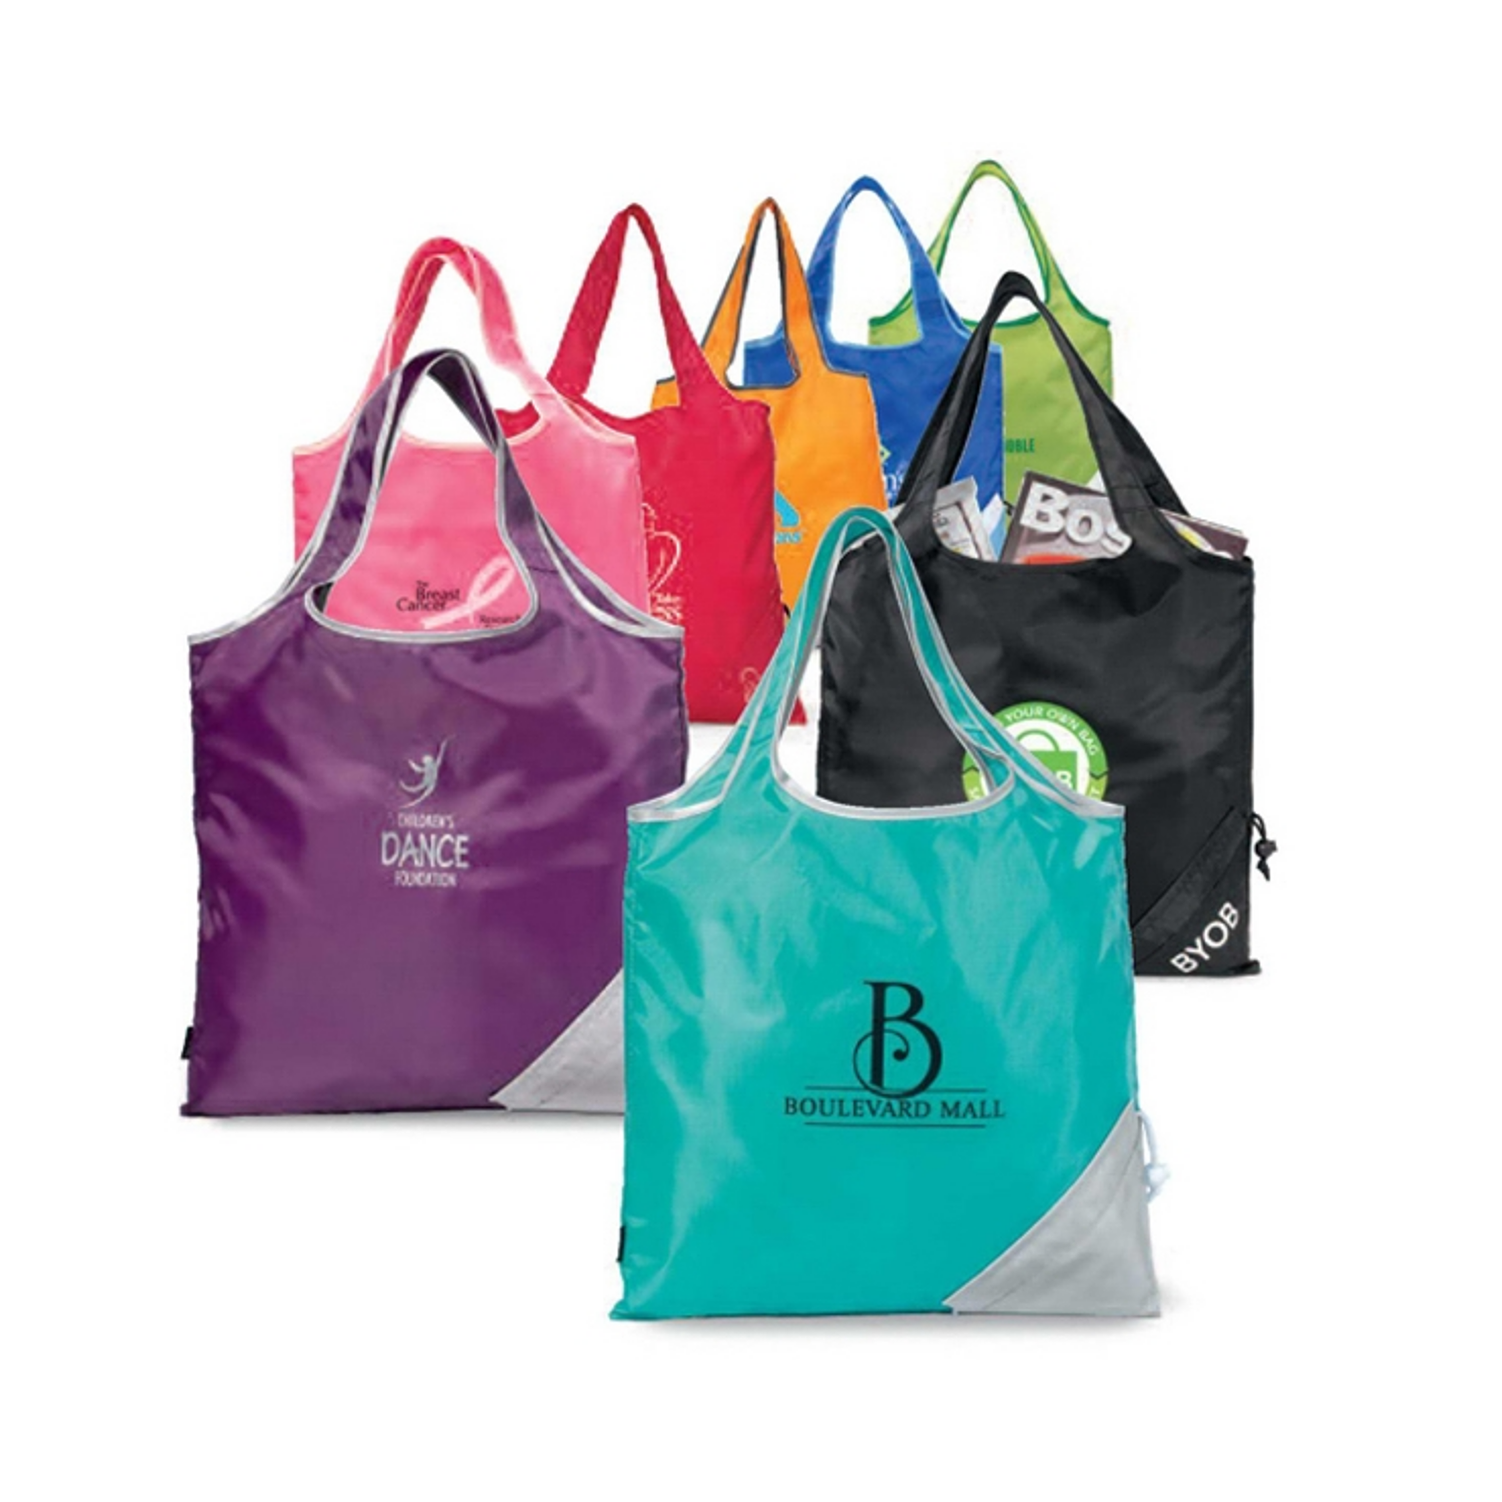 Breast Cancer Awareness Foldaway Shopping Bag